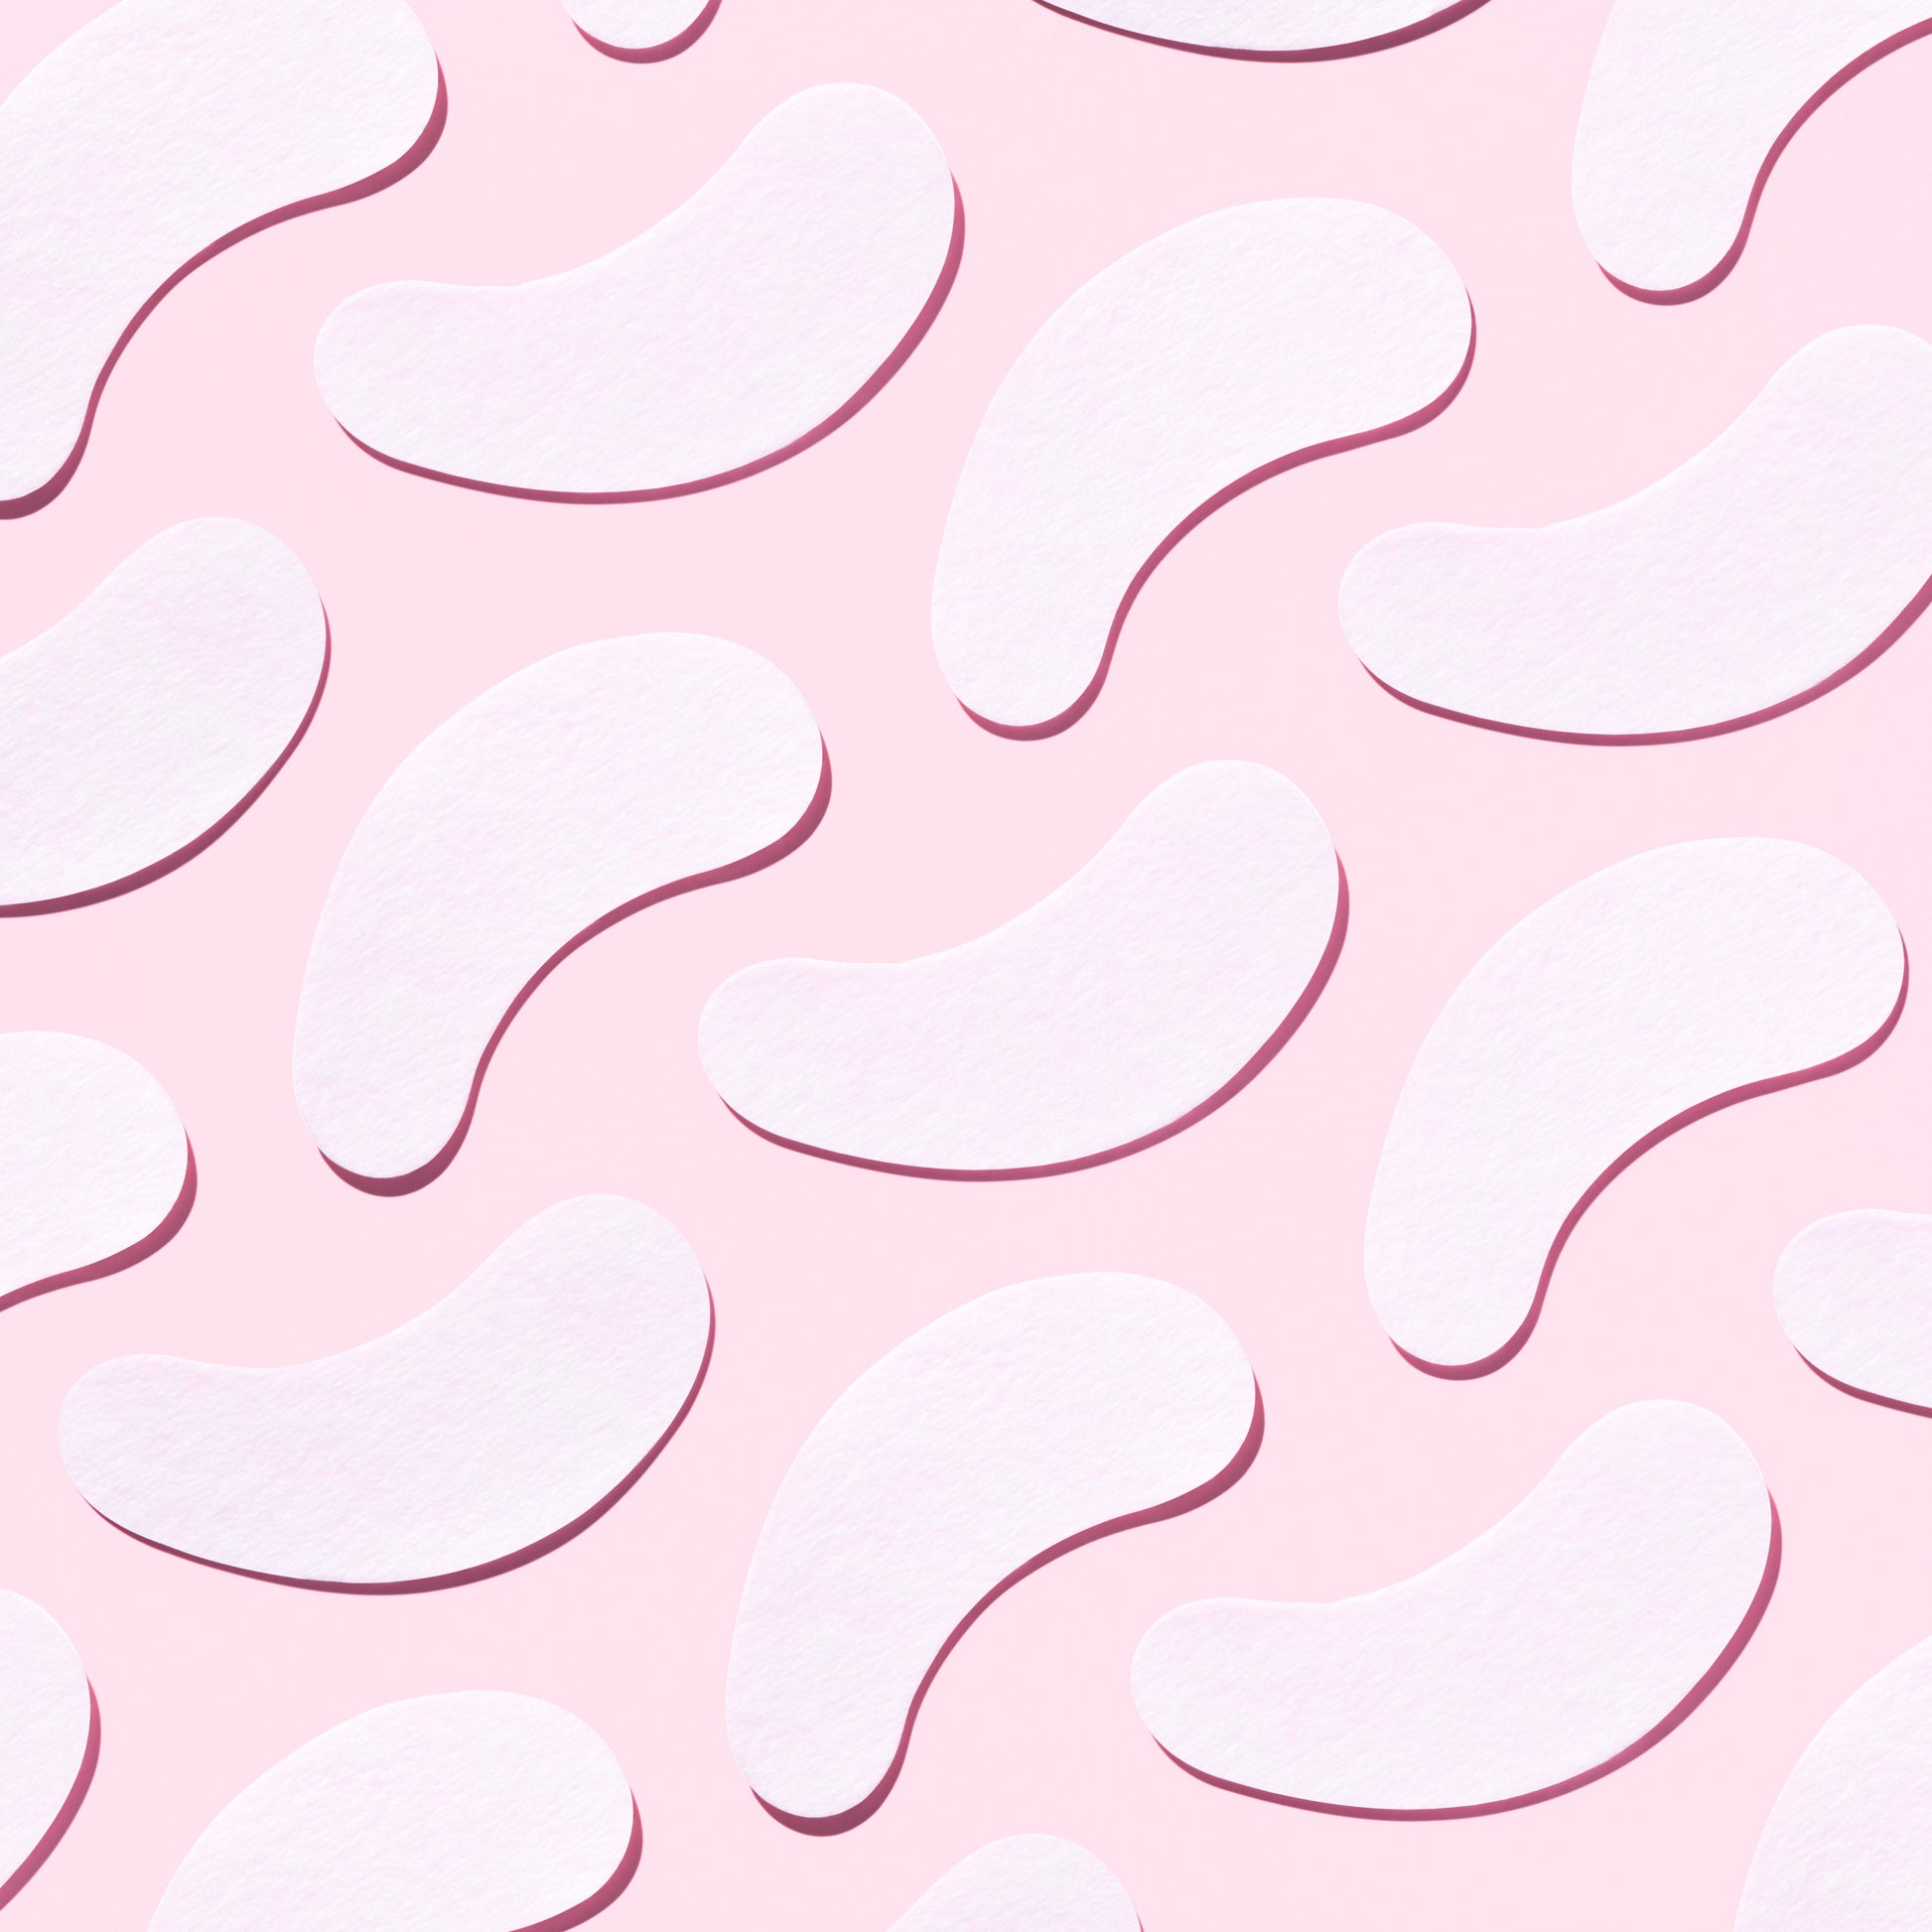 BELO Lash Hydrogel eye pads neatly arranged on a pink background, showcasing their sleek design and premium quality.